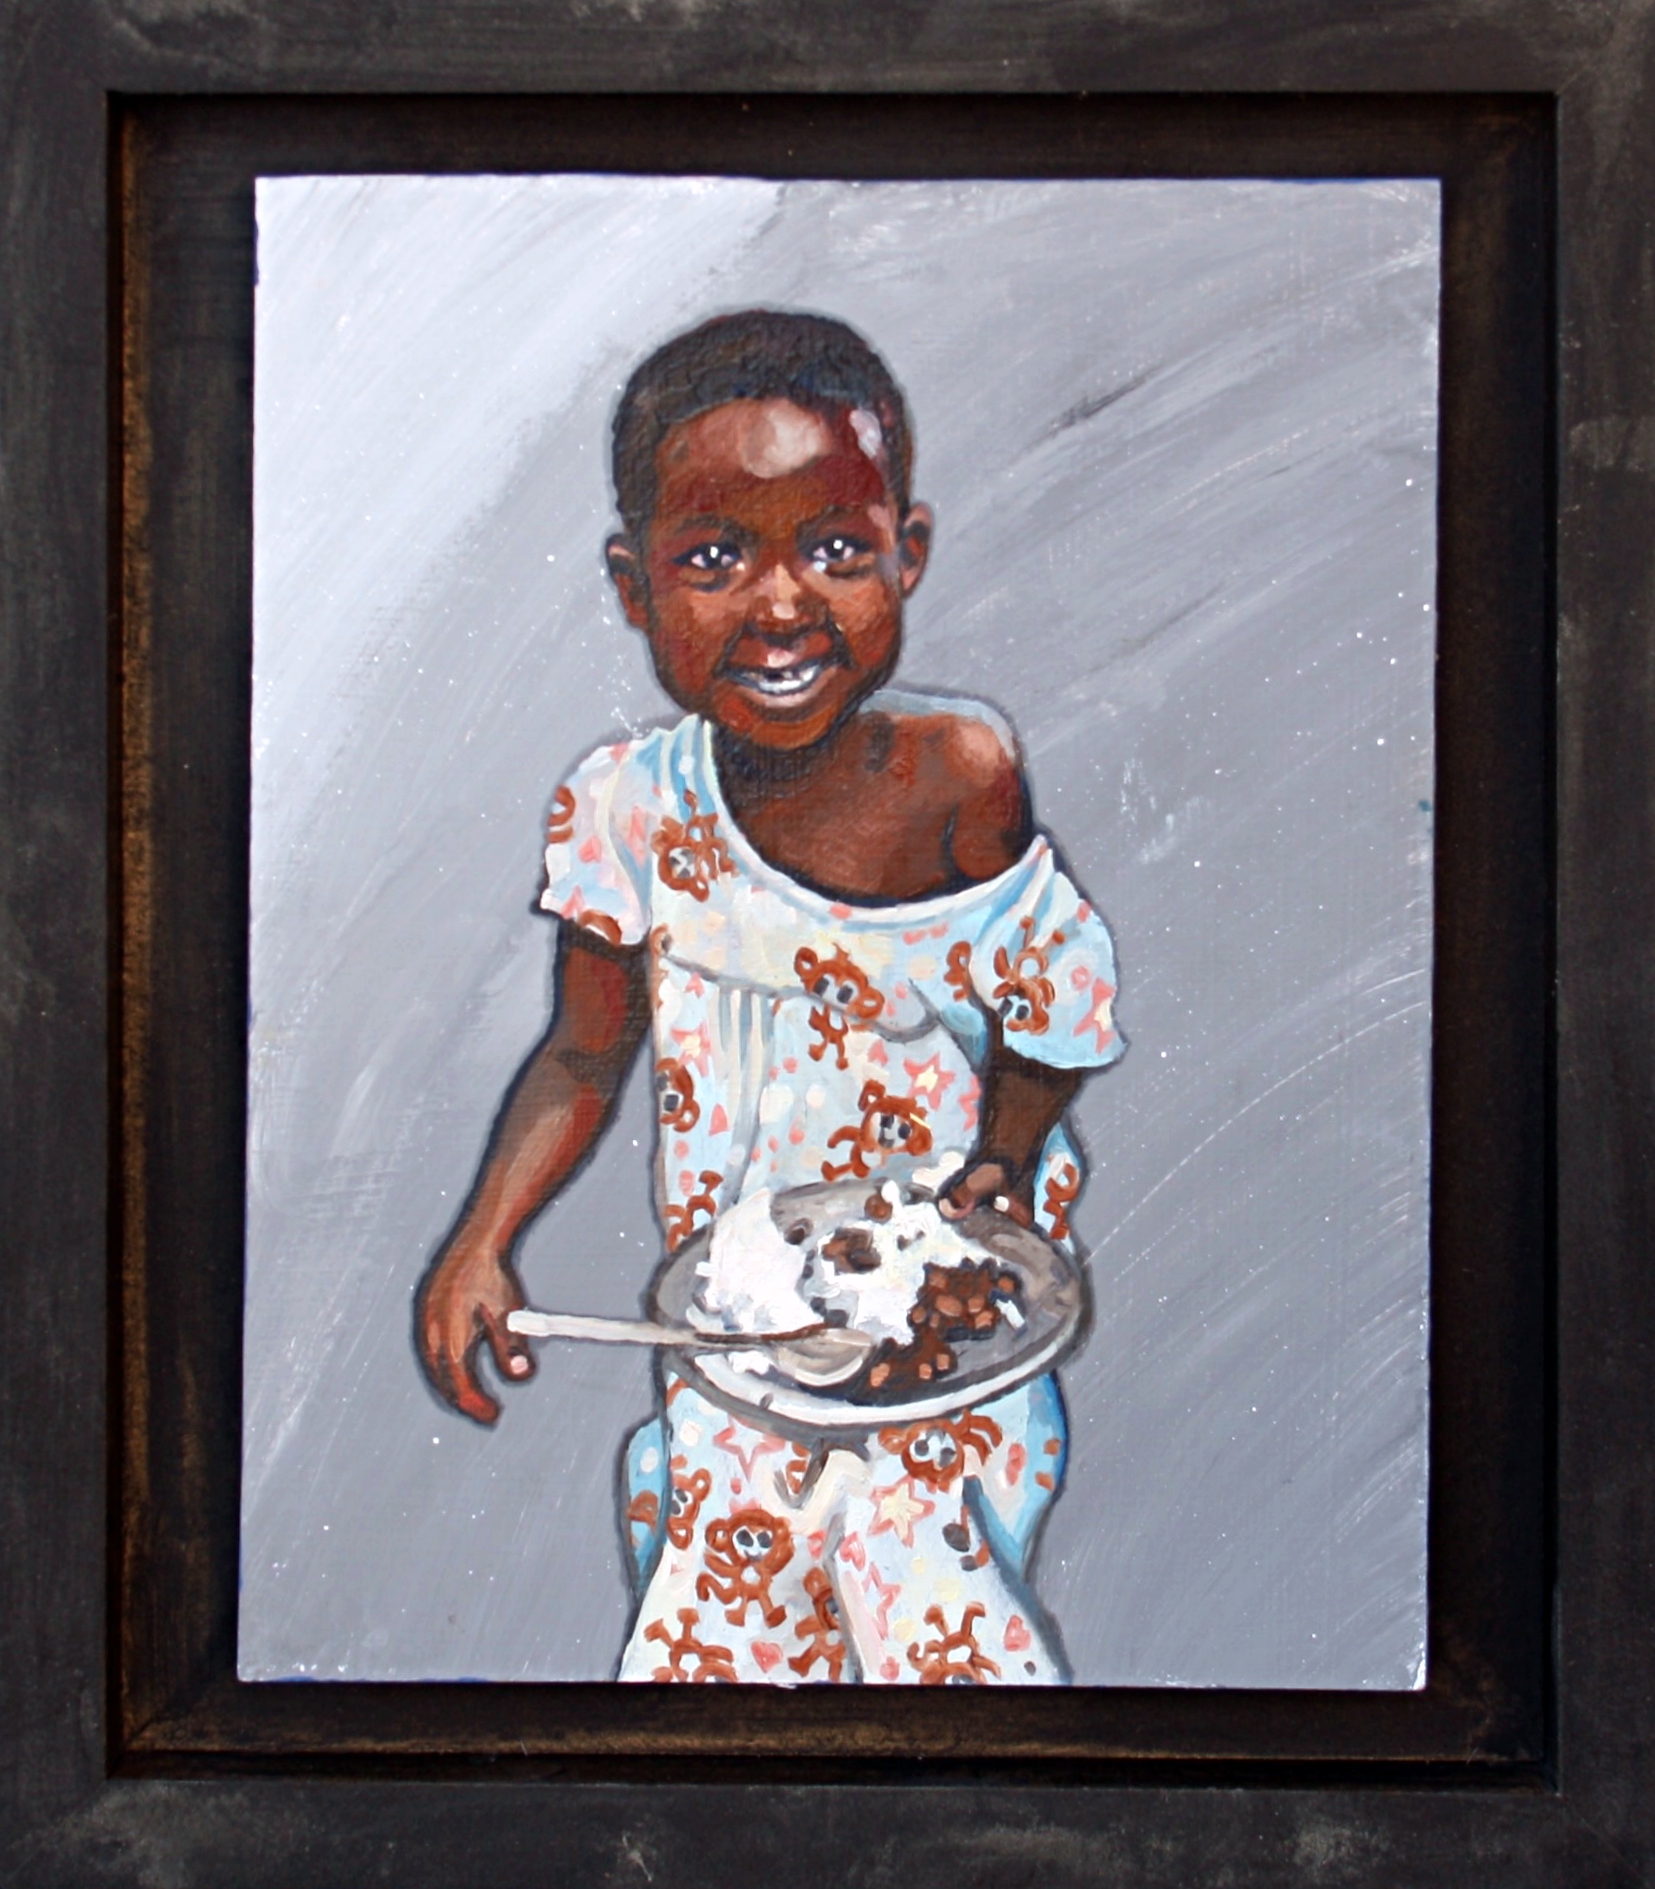 school art artist geoff phillips maple creek feeding program home of hope images children africa rwanda kenya india child baby dream centre alberta canada paint painting 